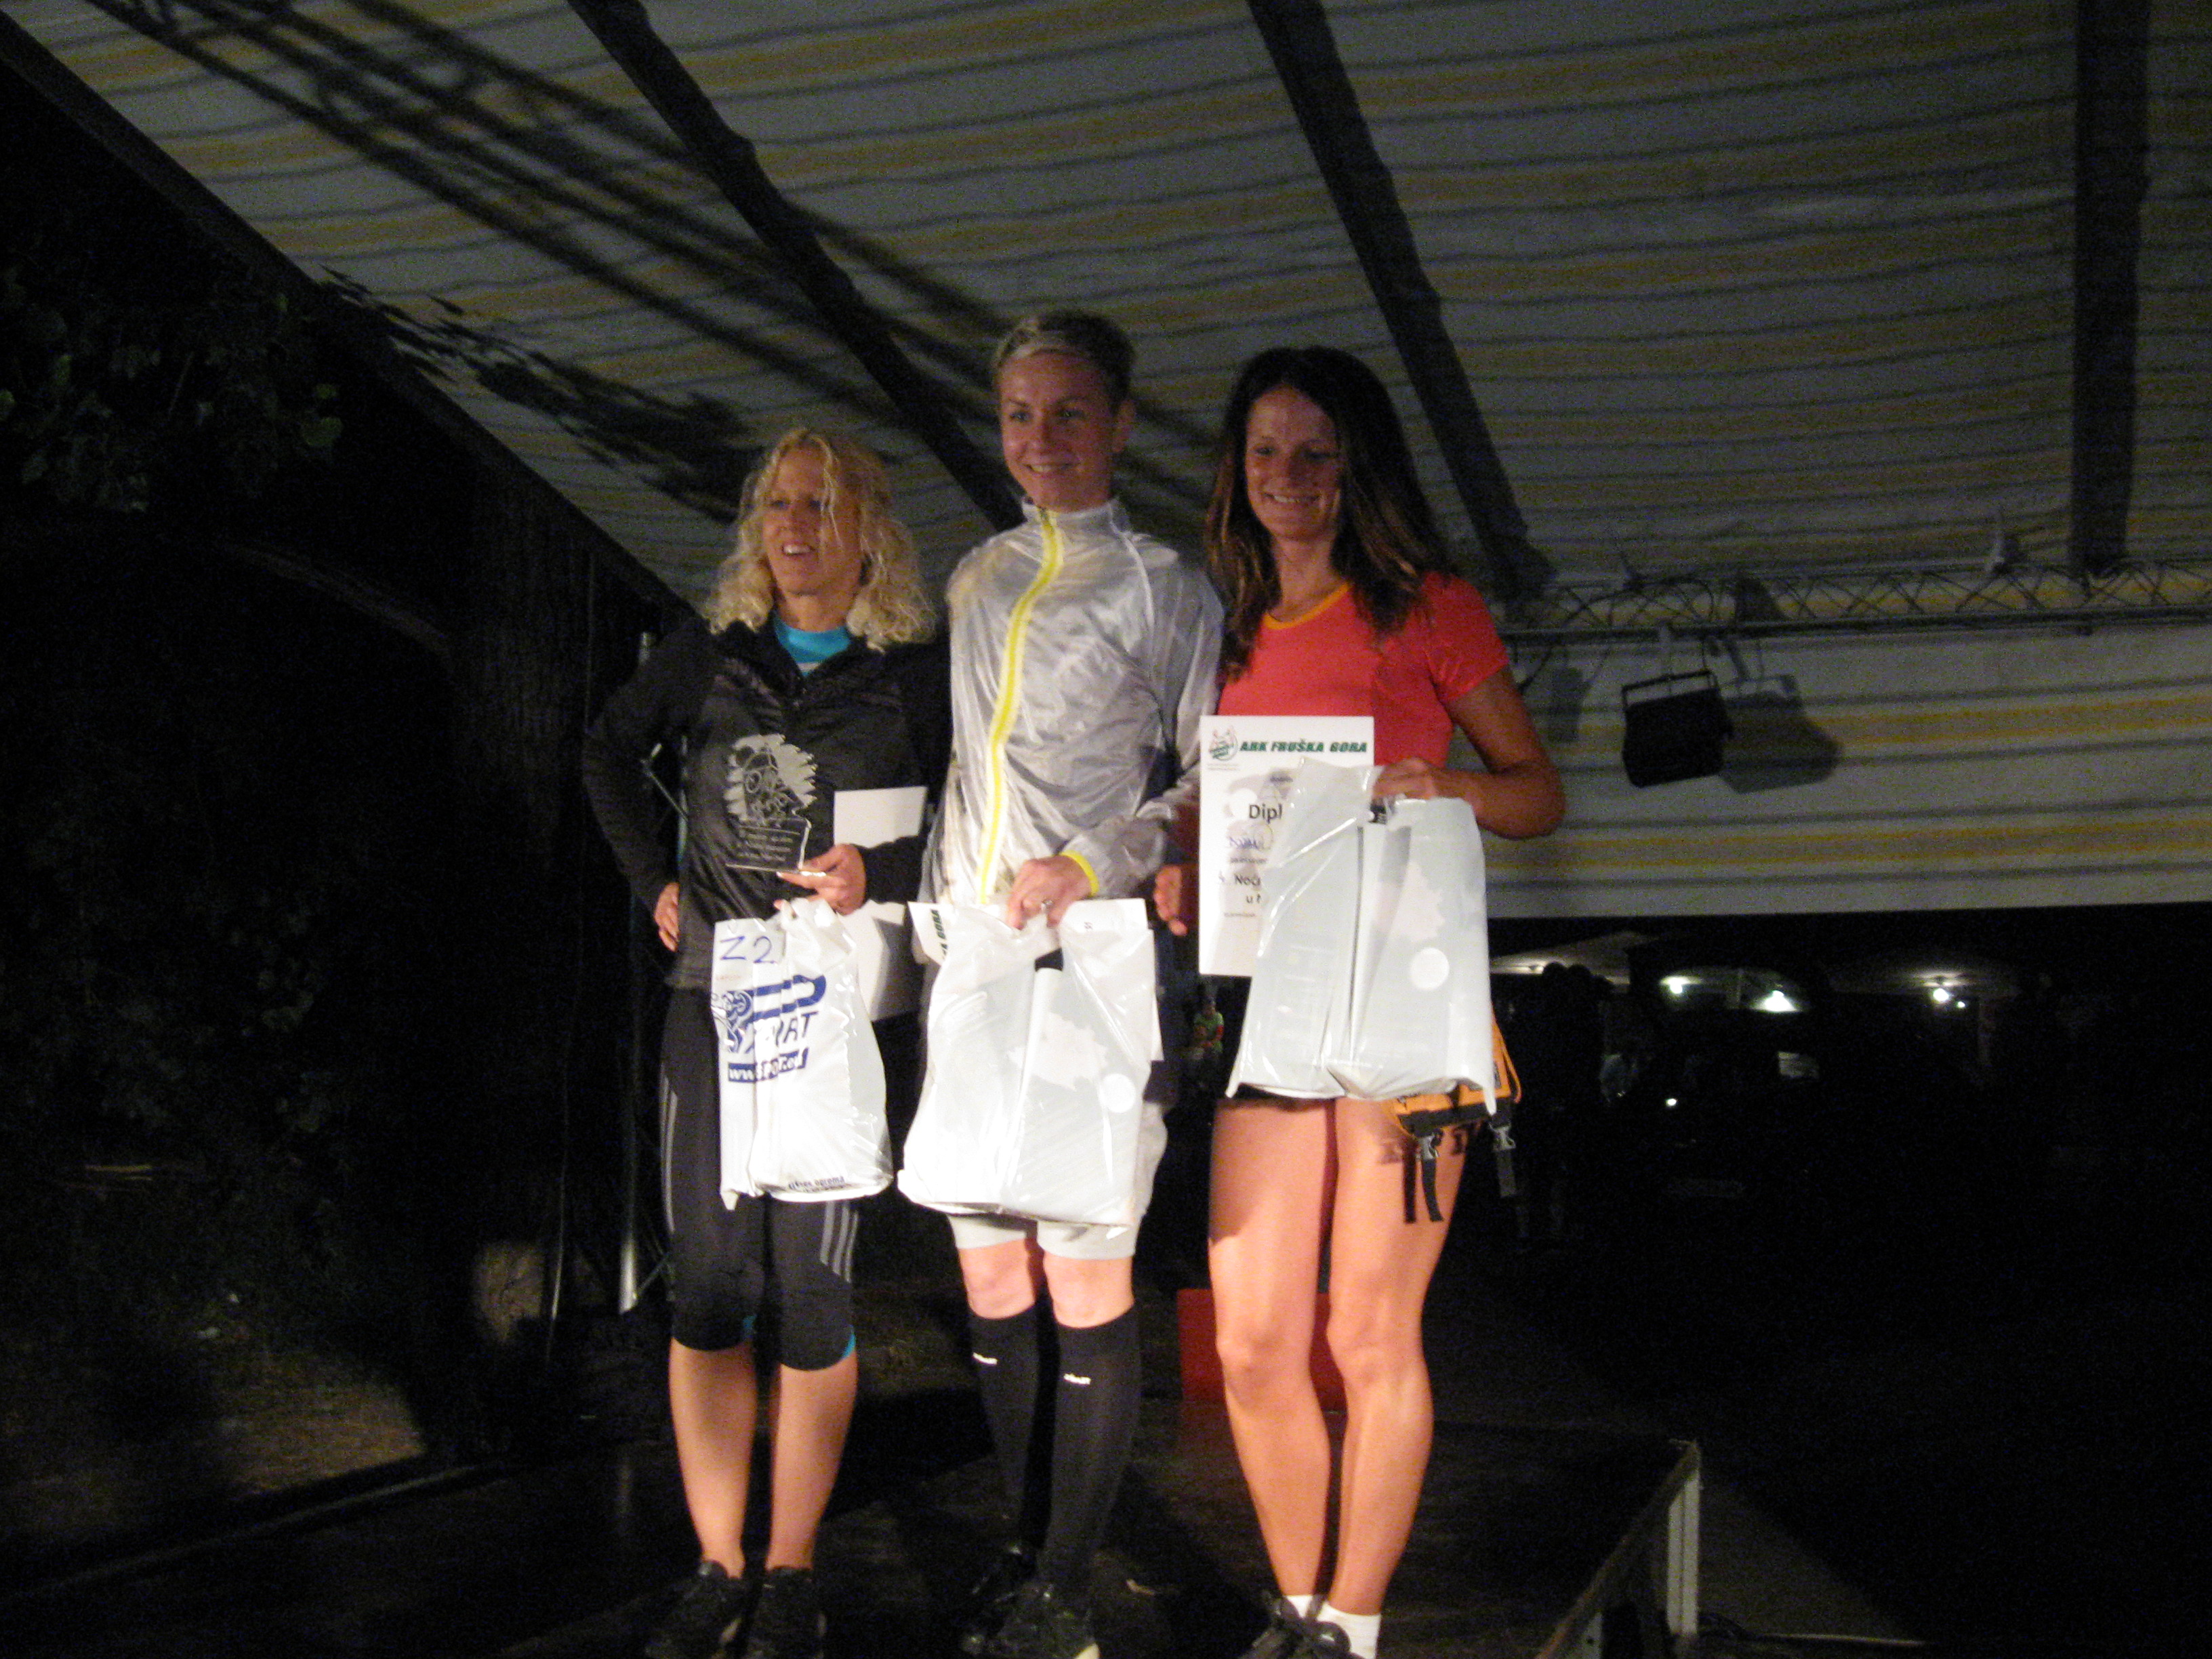 Marathon lady winners